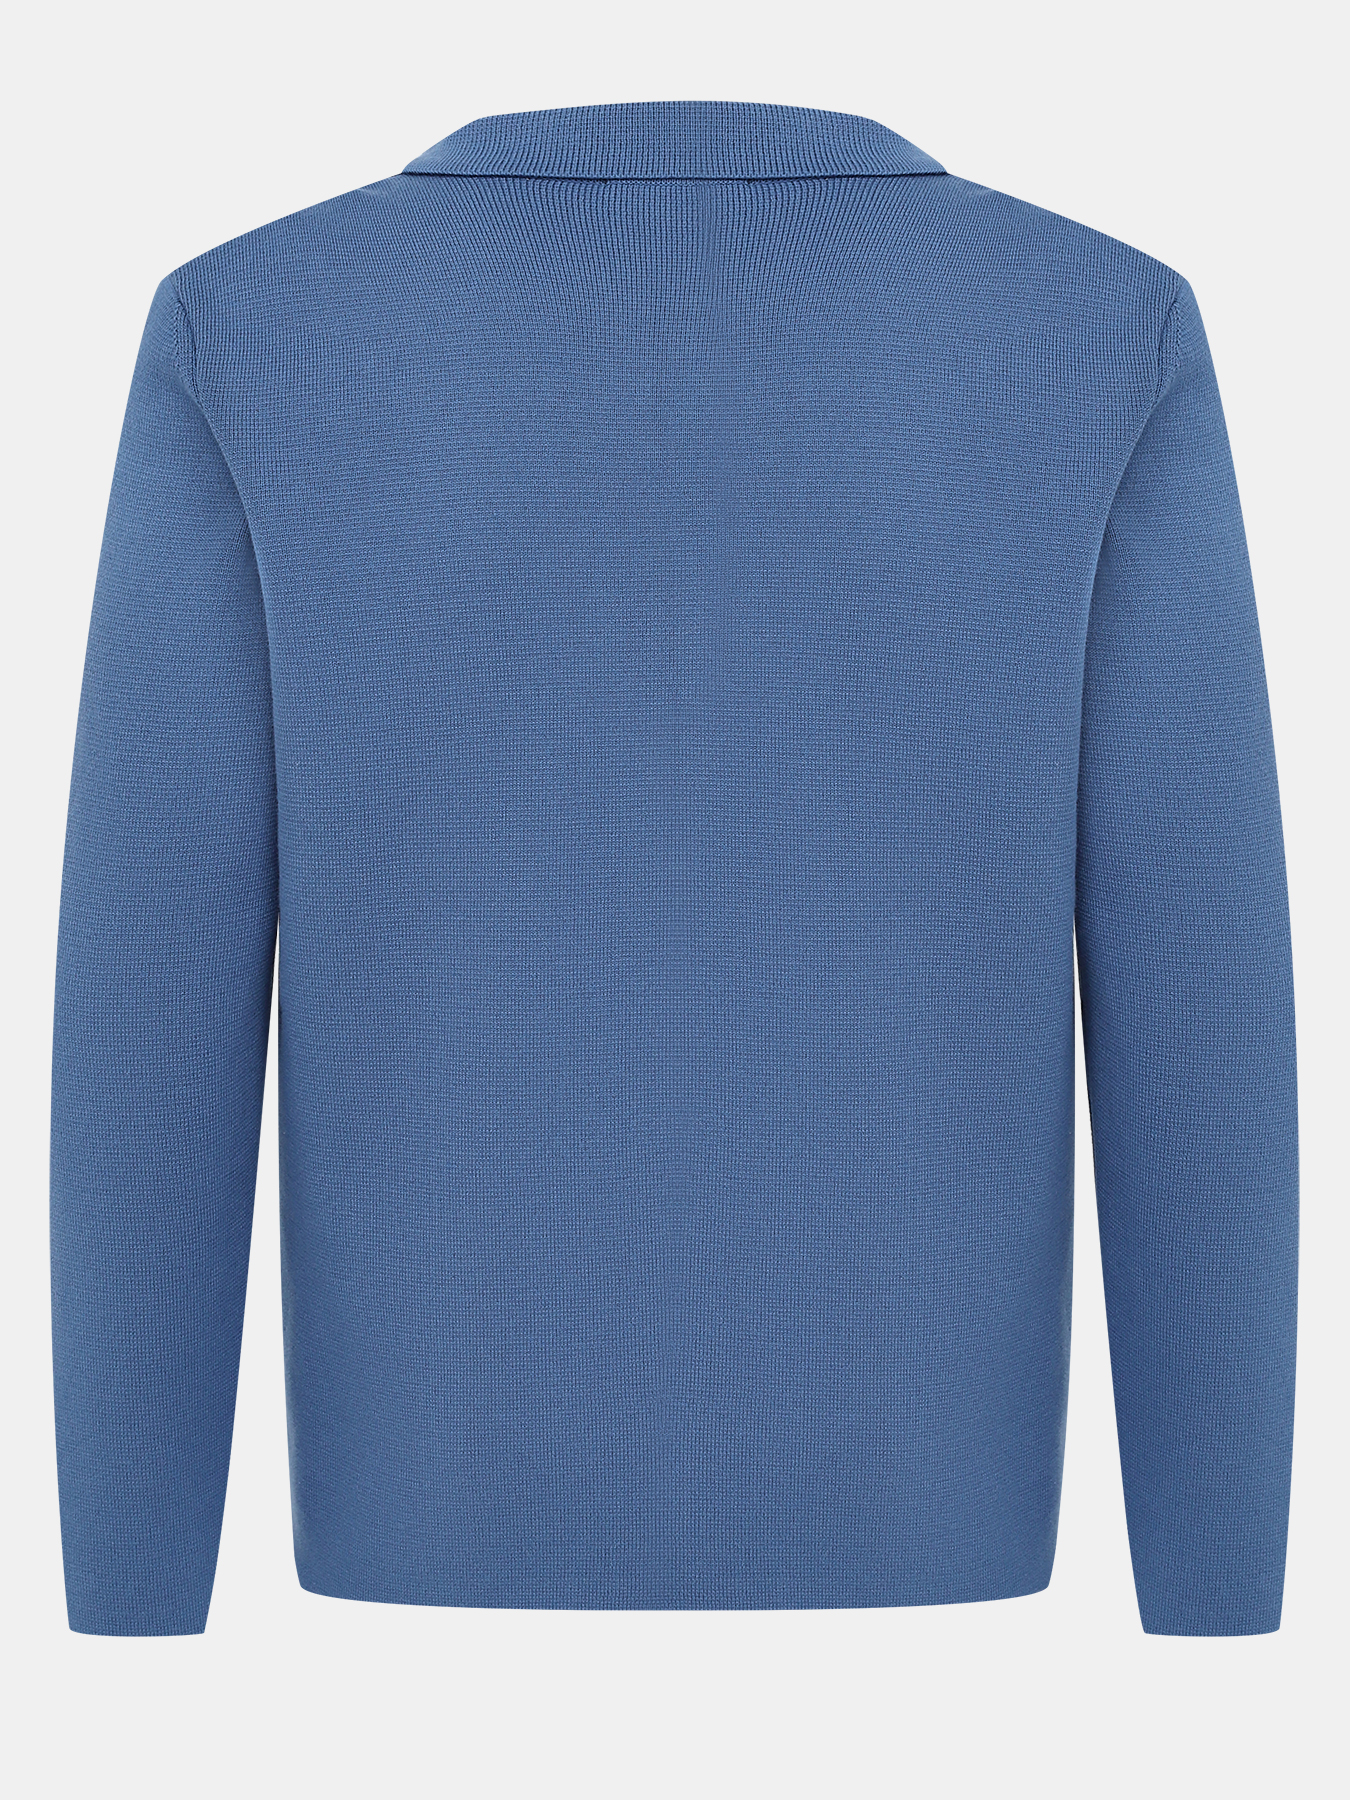 Пиджак Alessandro Manzoni 397142-025, цвет синий, размер 48 - фото 3